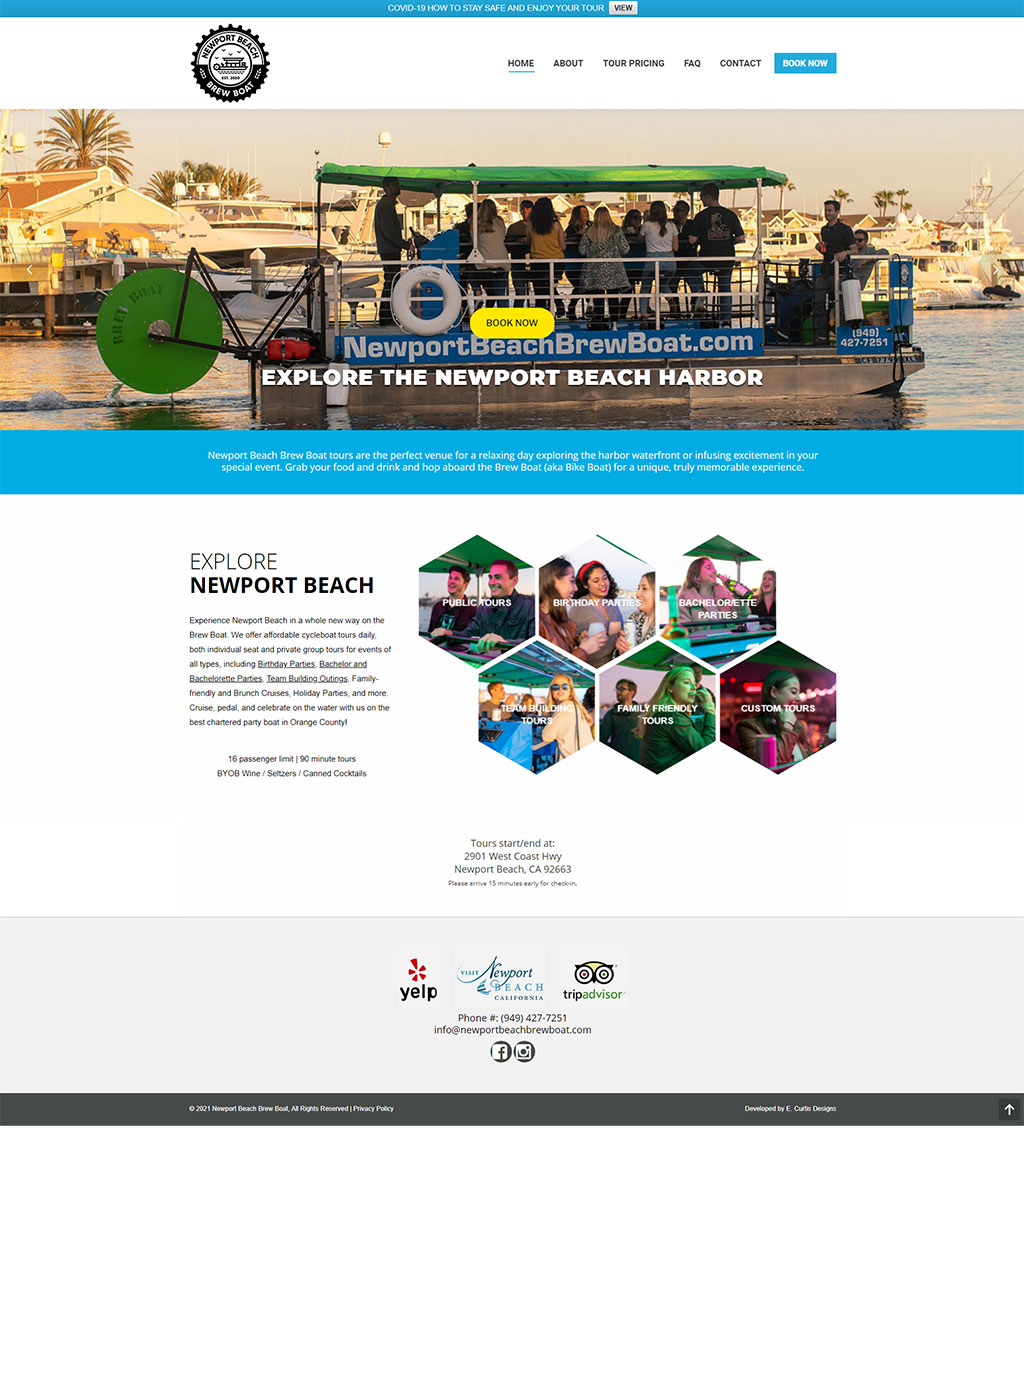 Web development for Newport Beach Brew Boat